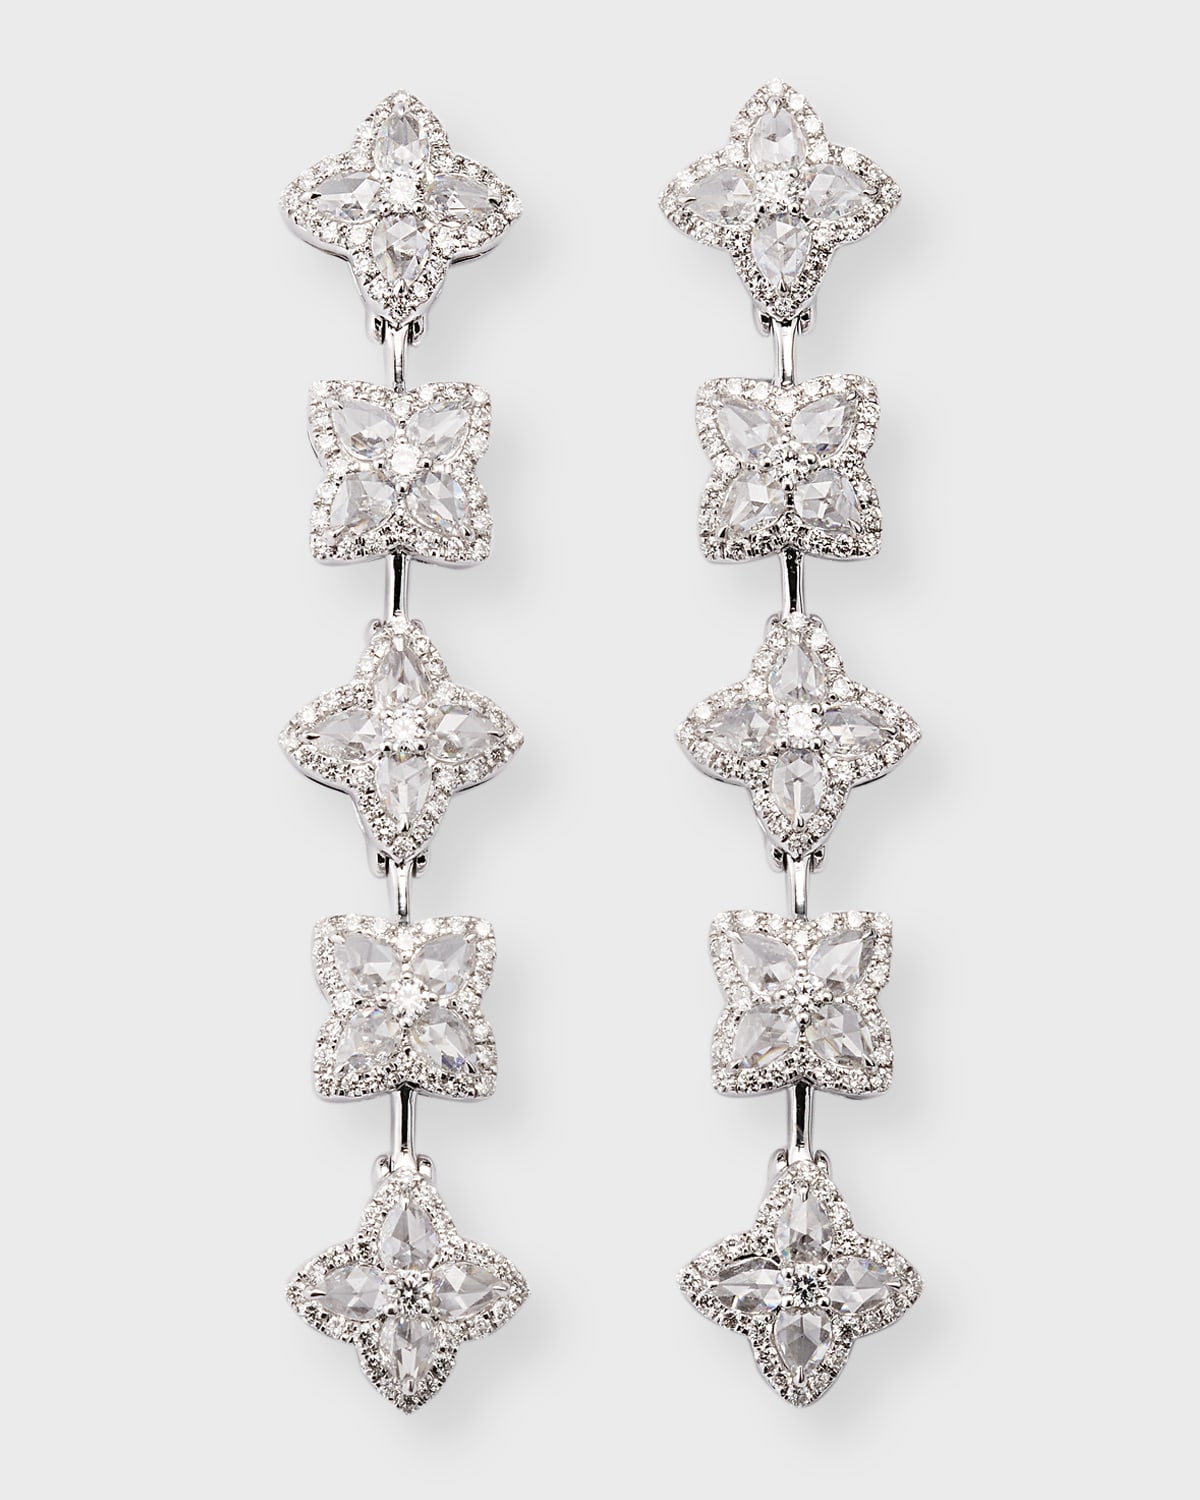 18K White Gold Simply Blossom Diamond Drop Earrings, 2"L